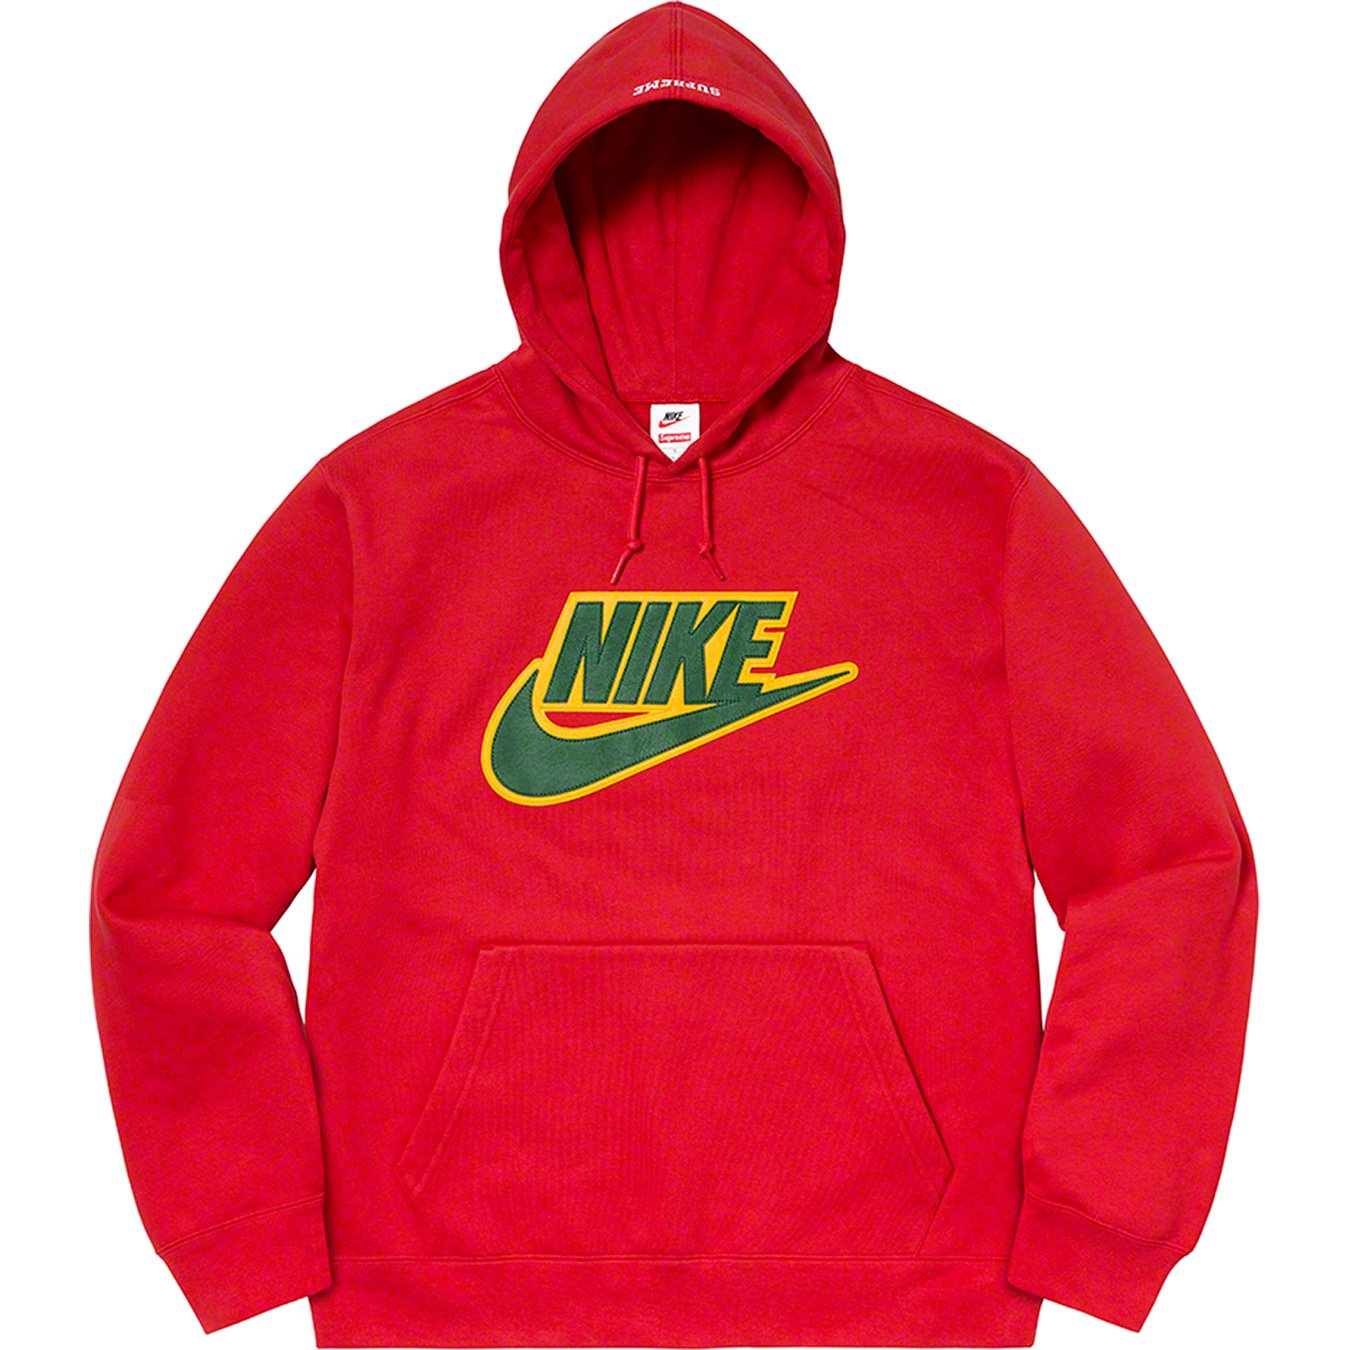 Supreme®/Nike® Leather Appliqué Hooded Sweatshirt - Supreme Community